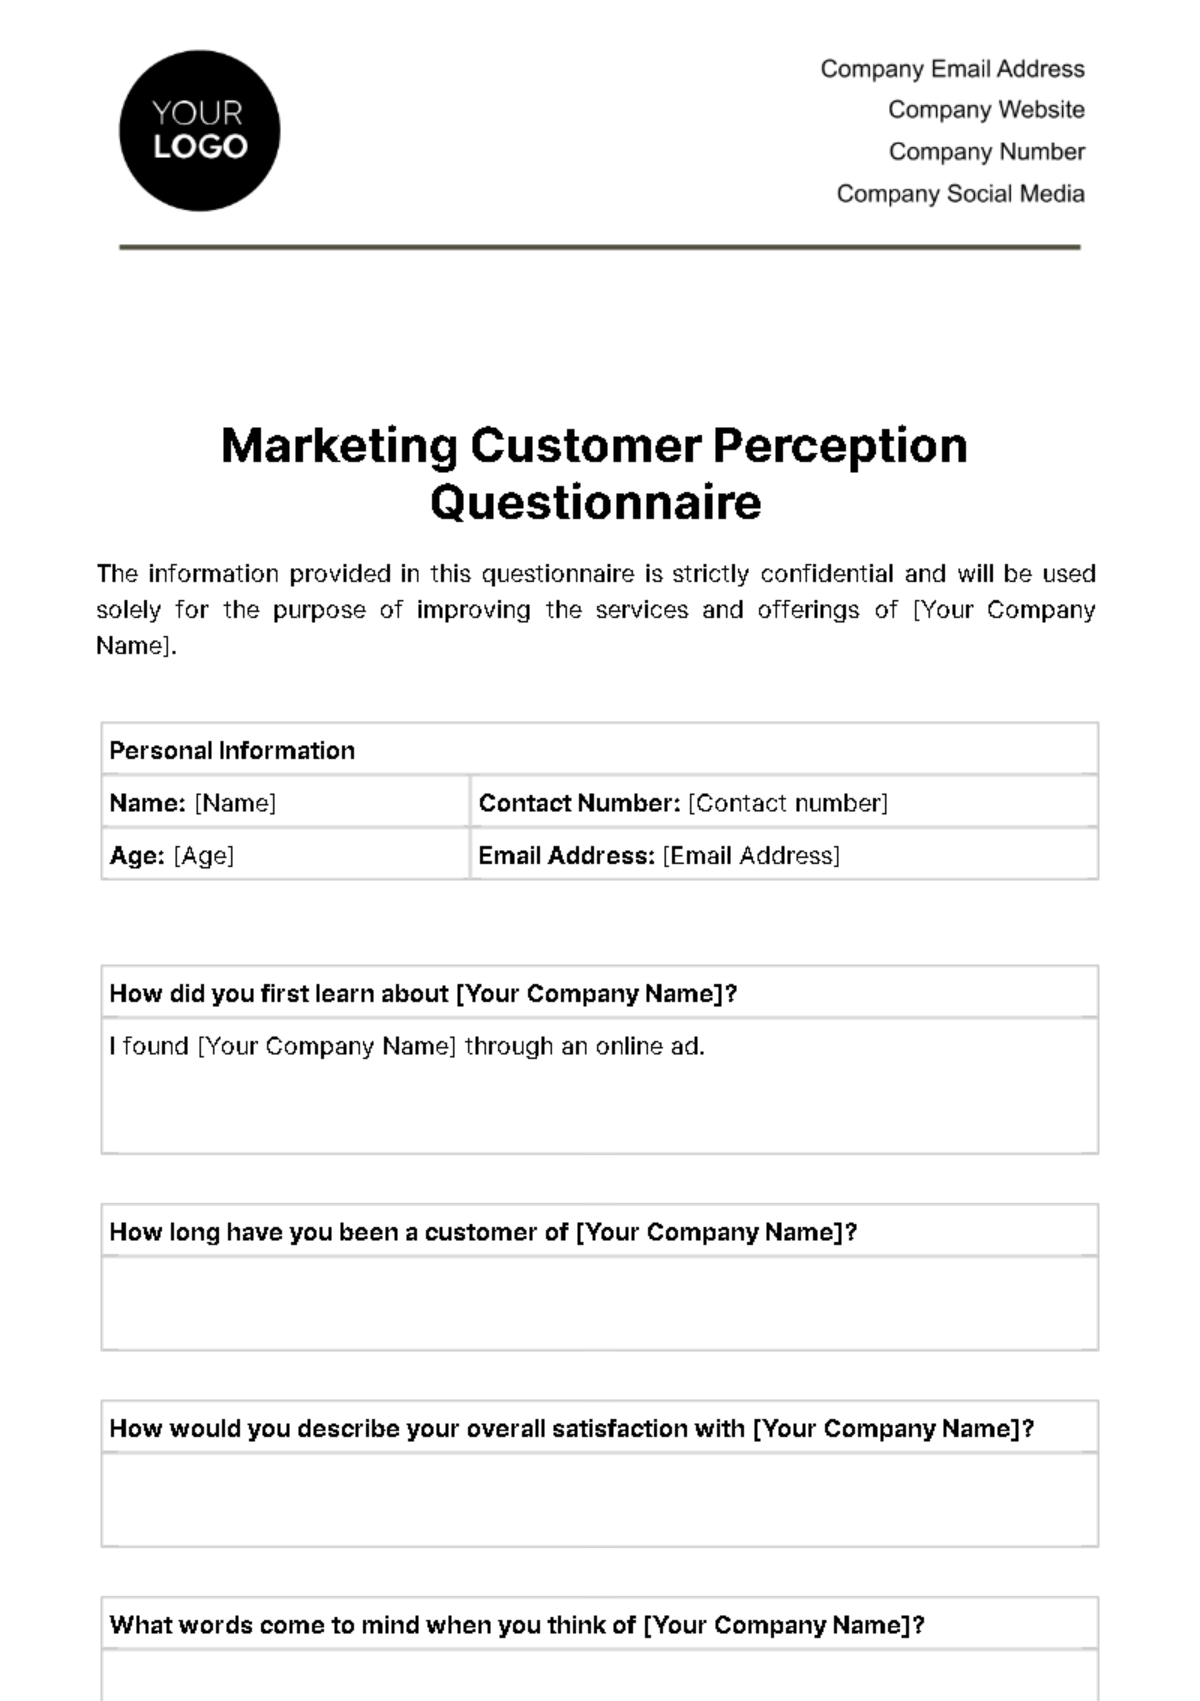 Marketing Customer Perception Questionnaire Template